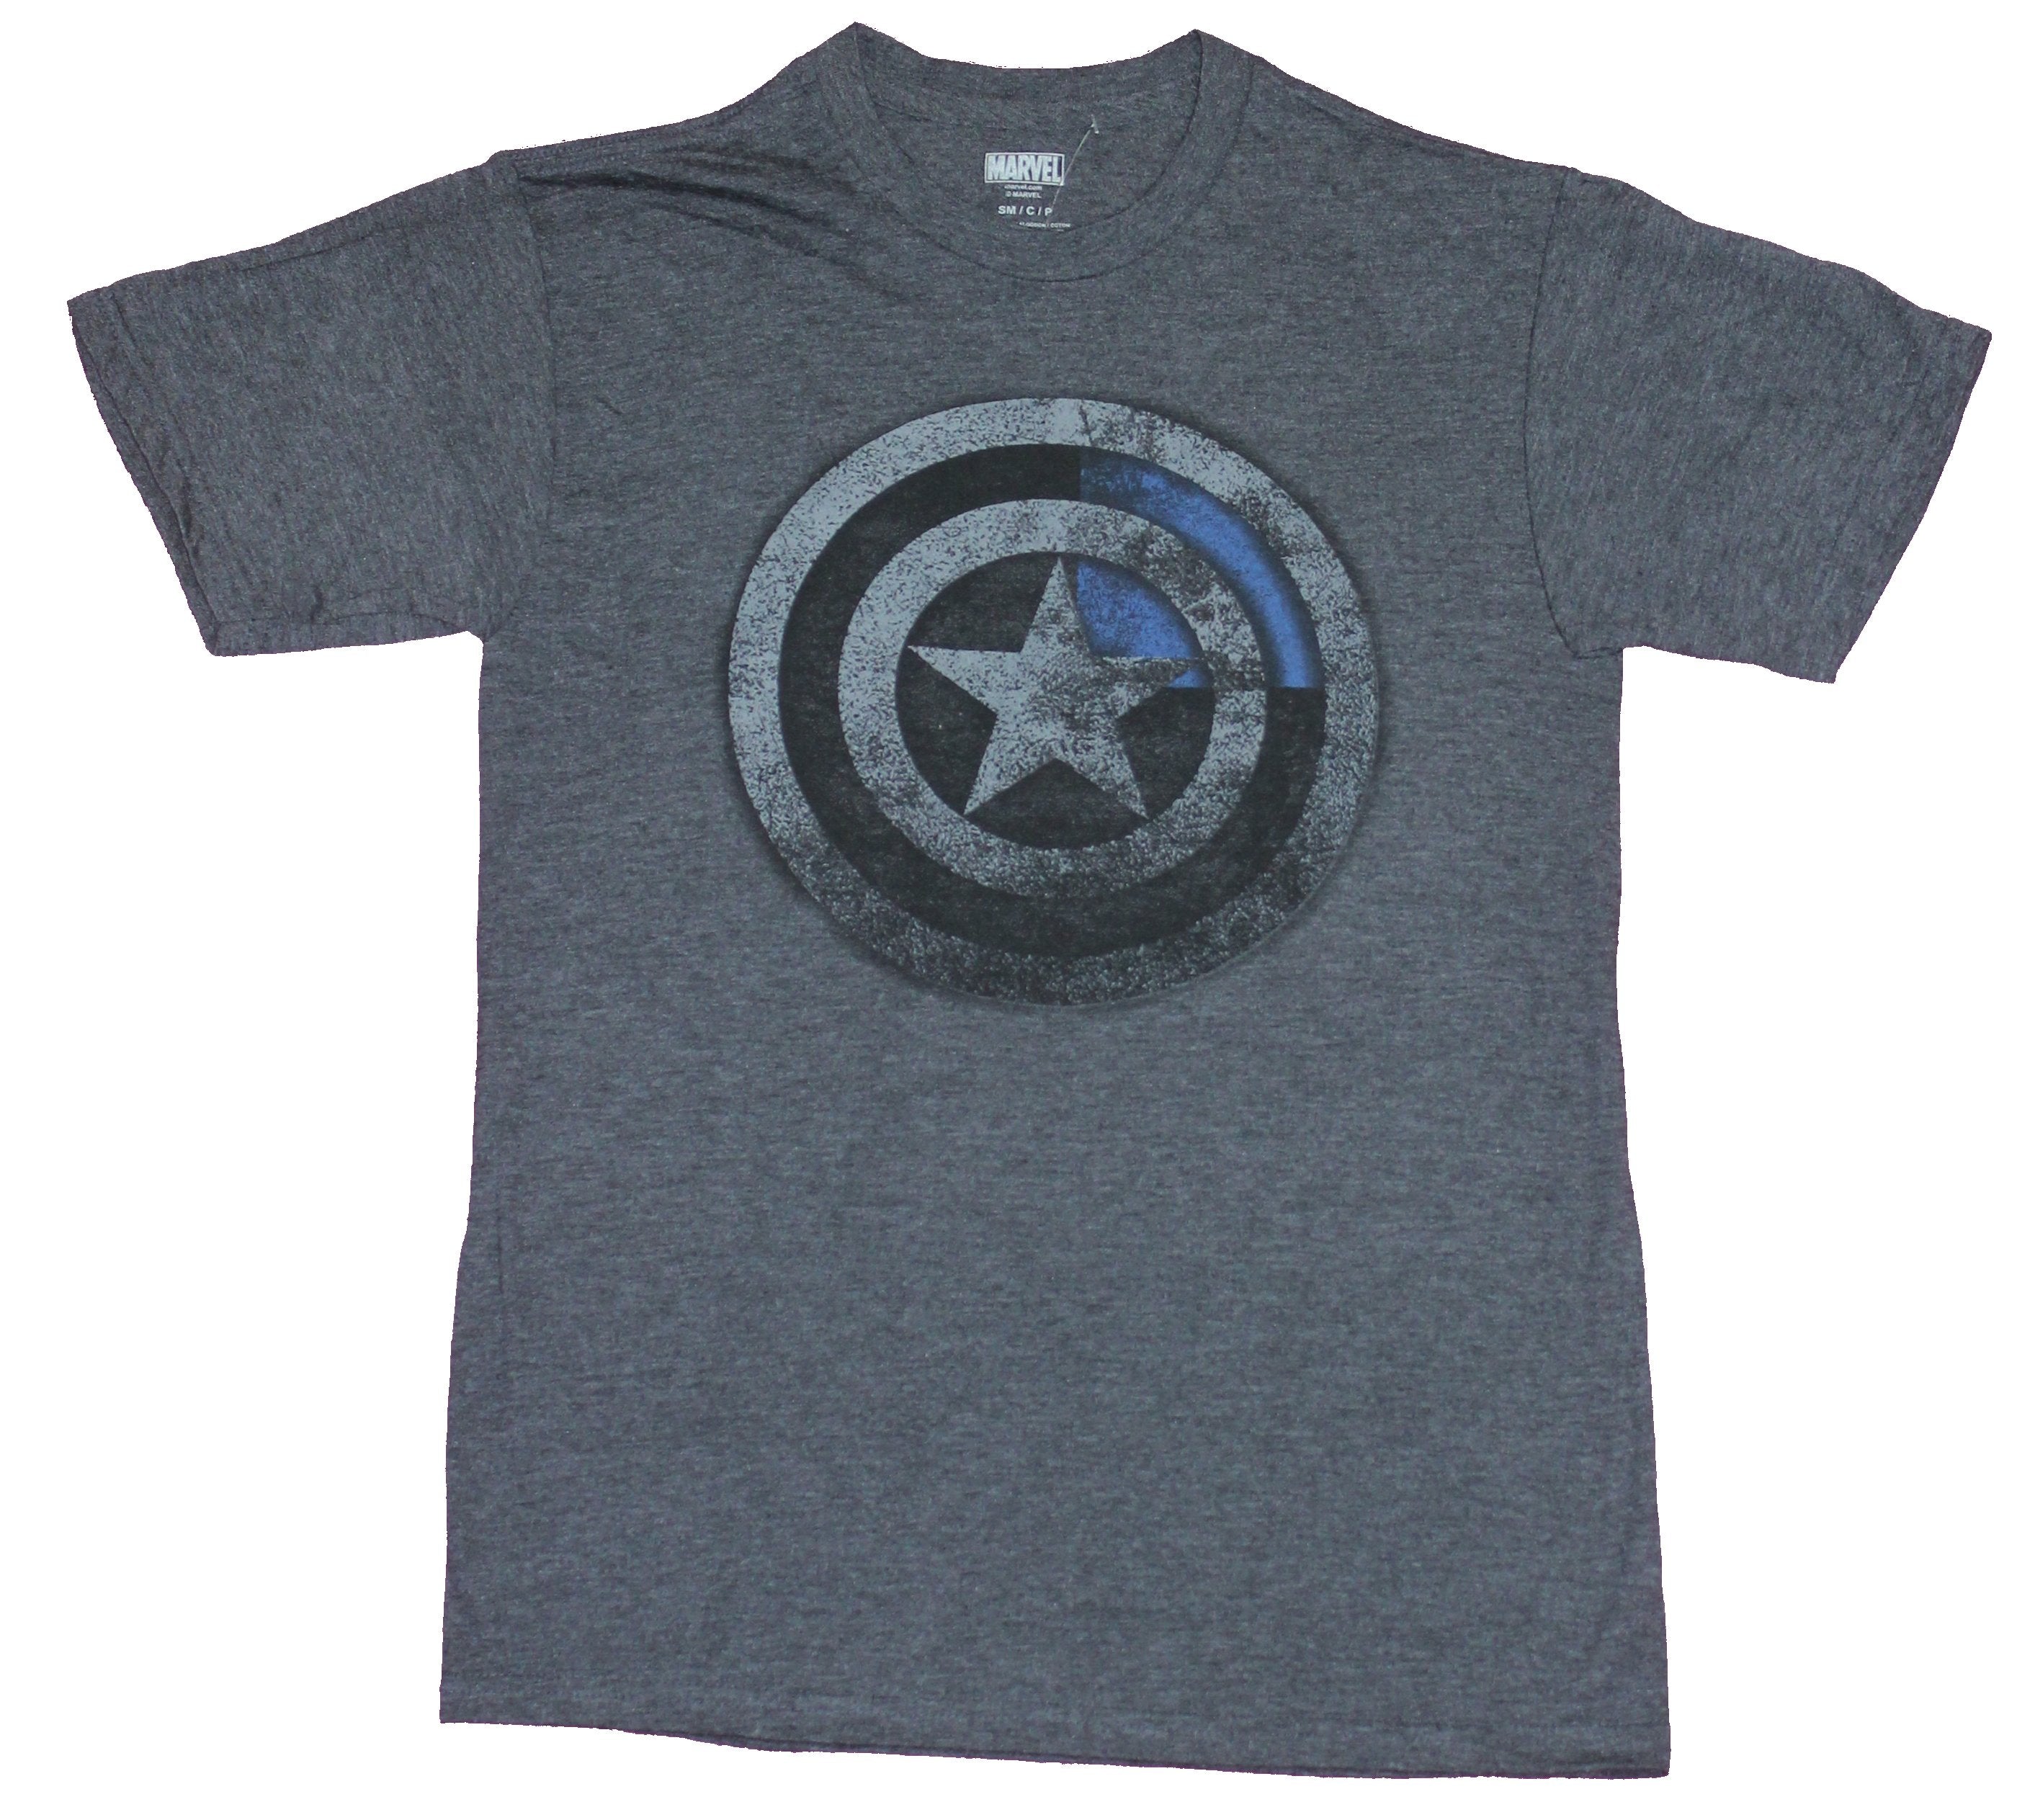 Captain America Mens T-Shirt - Faded Shield with Blue Quadrant